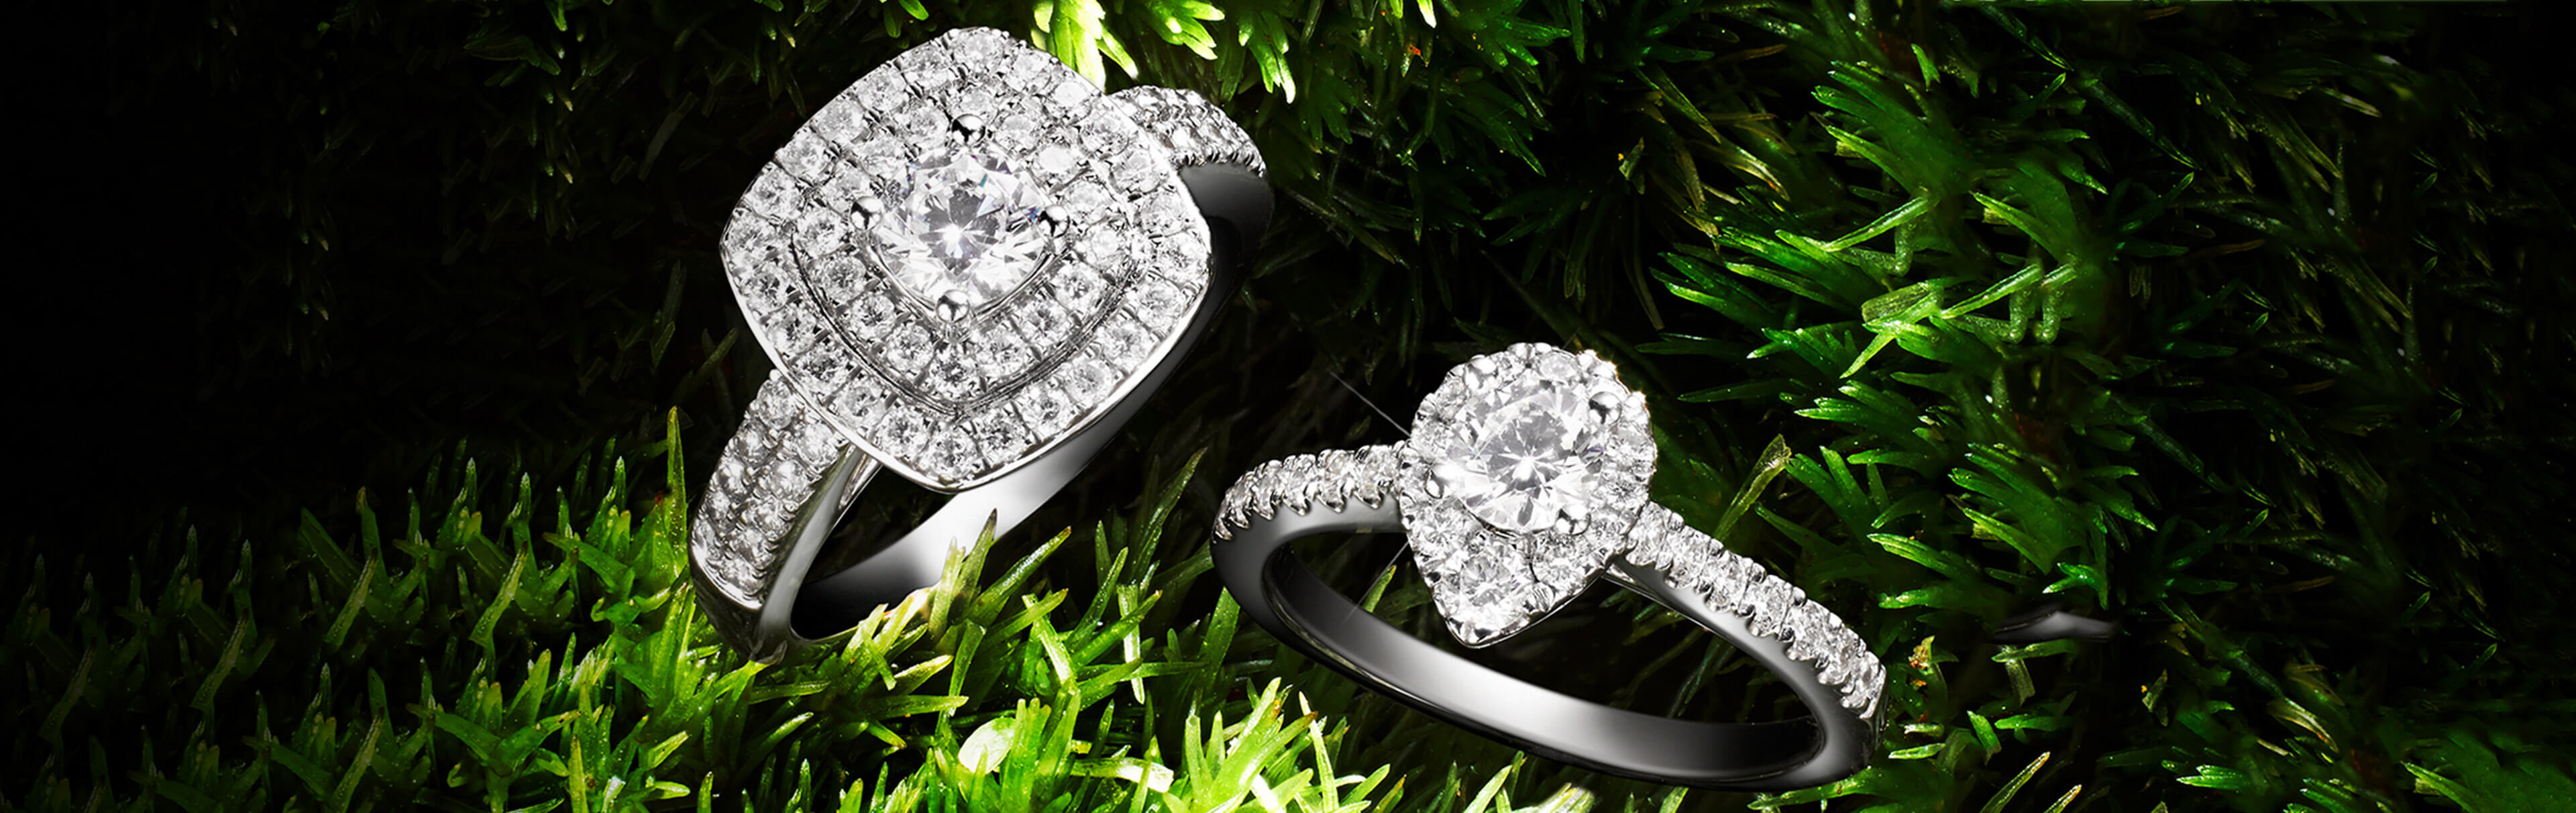 How to Buy a Diamond Ring - Ernest Jones